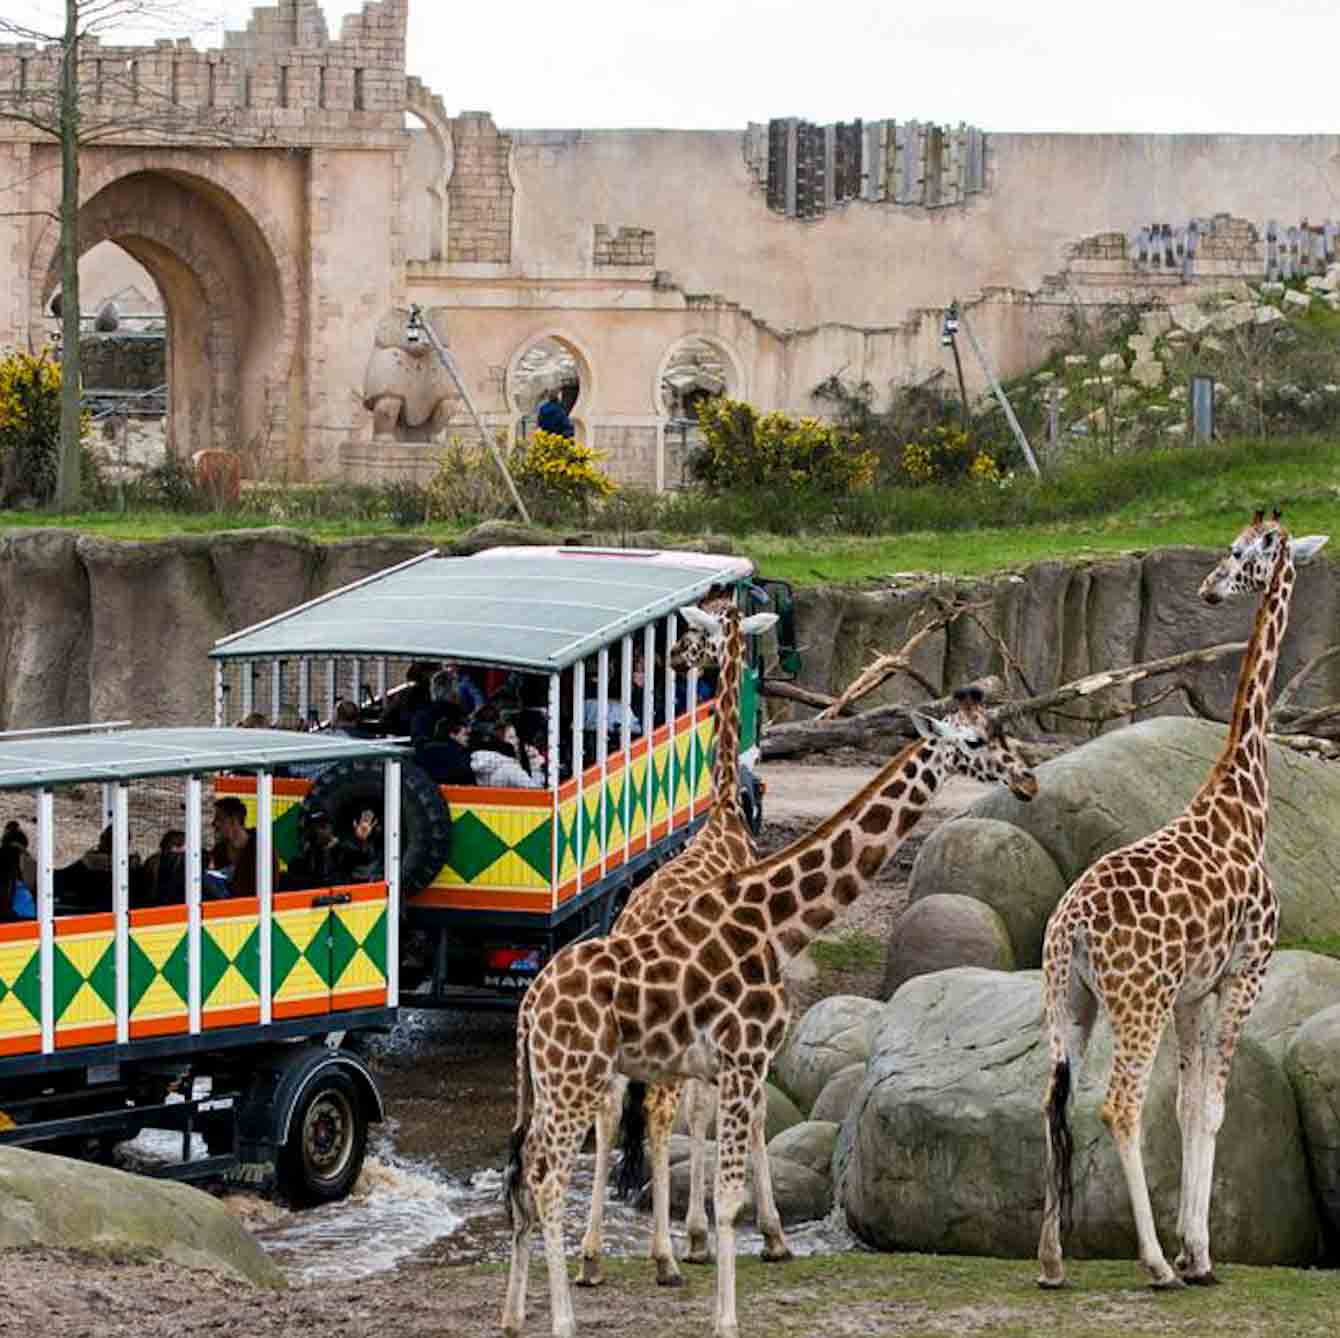 Adventure Zoo Emmen - Safari car with giraffes